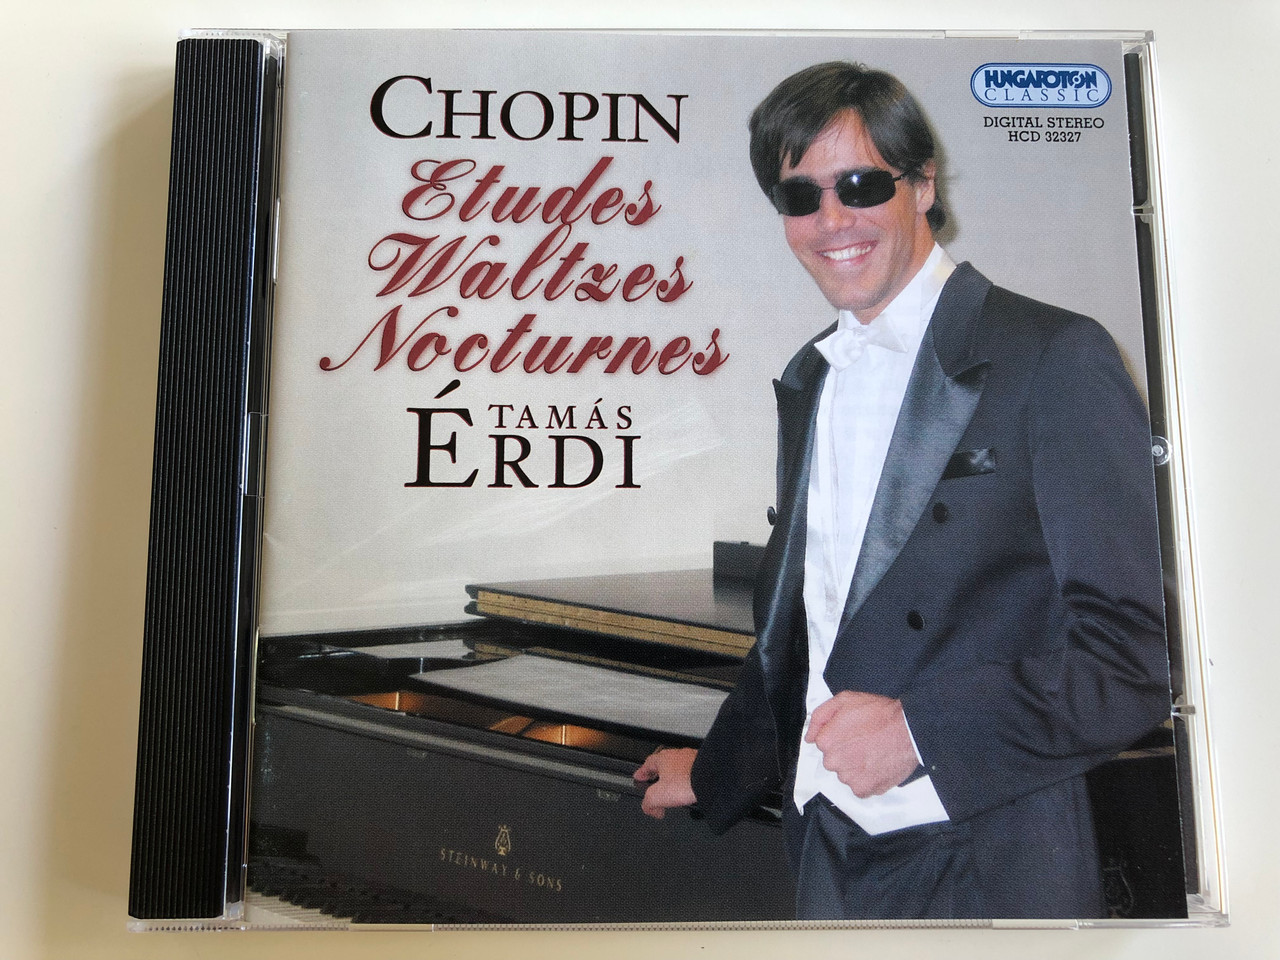 Chopin - Etudes, Waltzes, Nocturnes / Tamás Érdi piano / Hungaroton Classic  Audio CD 2004 / HCD 32327 - bibleinmylanguage